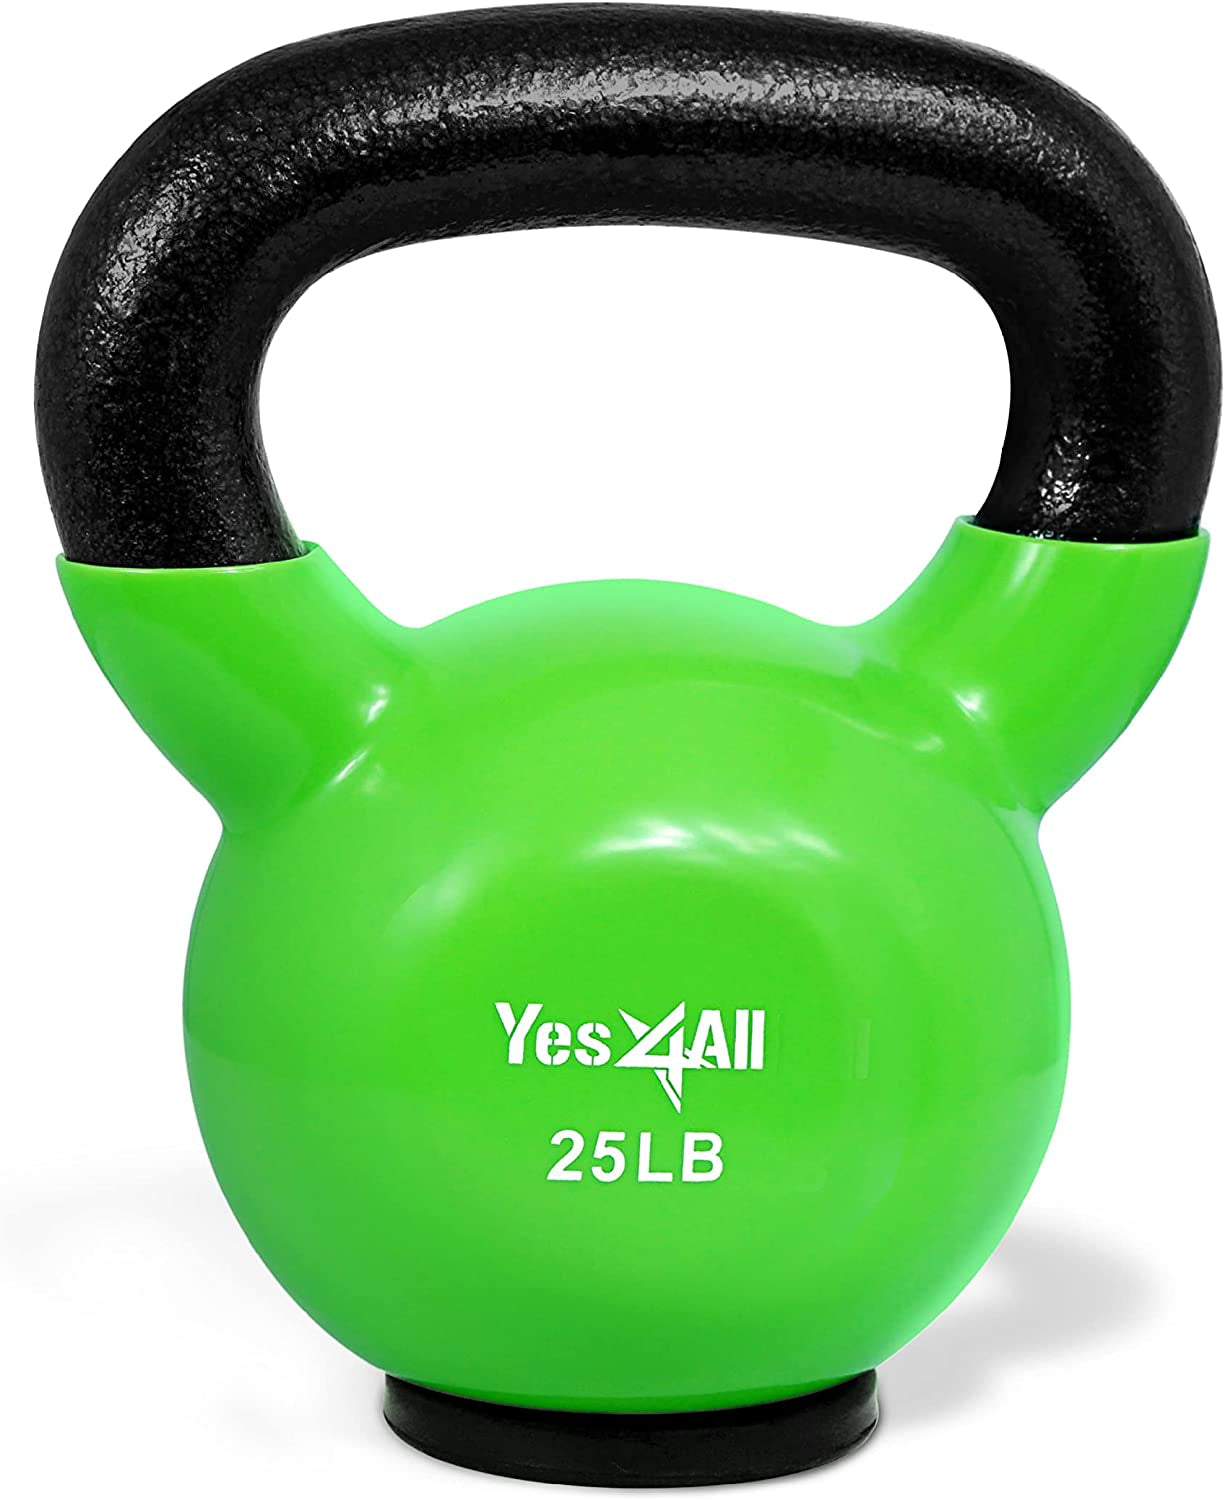 Kettlebells Rubber Base/Vinyl Coated Cast Iron Kettlebell - Exercise Fitness Weights for Home Gym, Strength Training